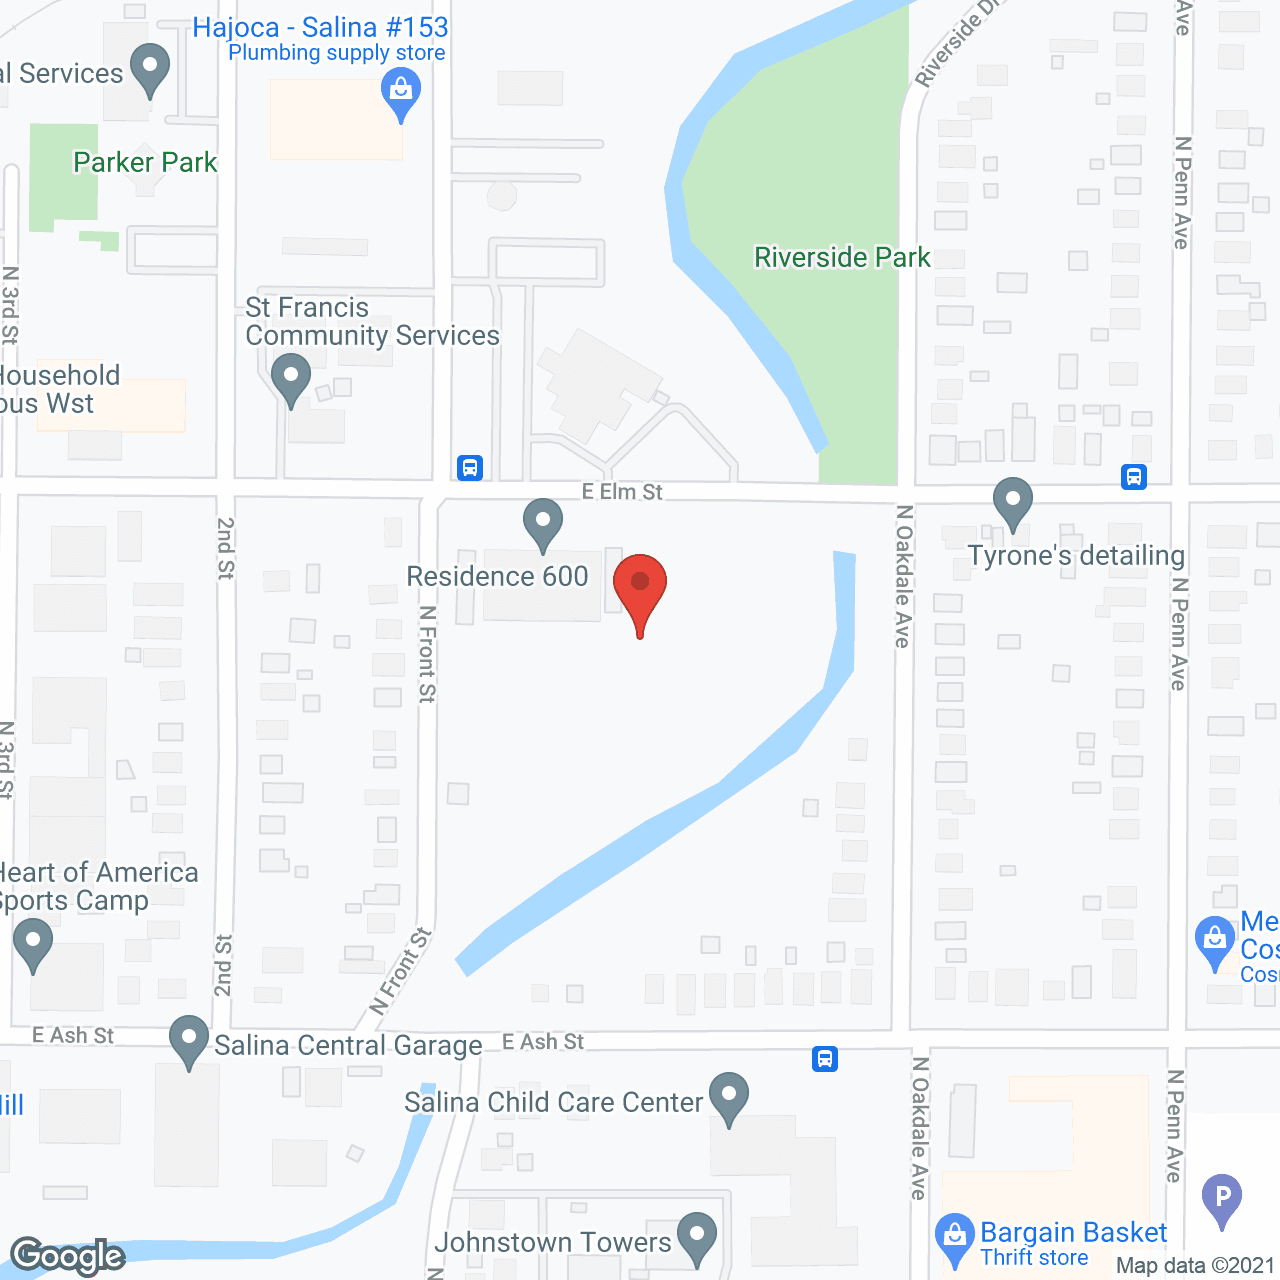 Residence 600 in google map